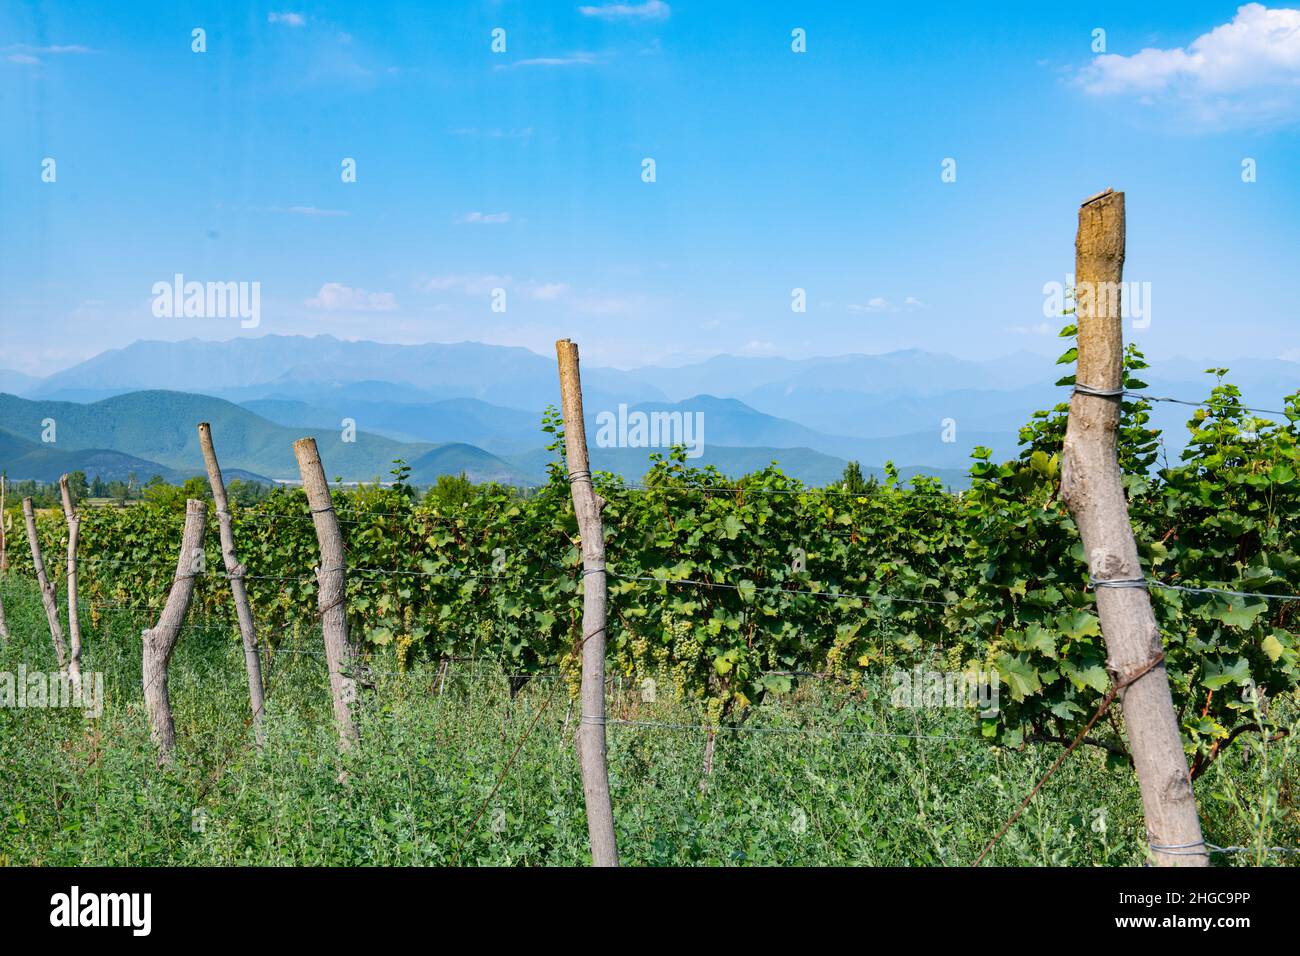 vineyard field in the suburbs of georgia Stock Photo